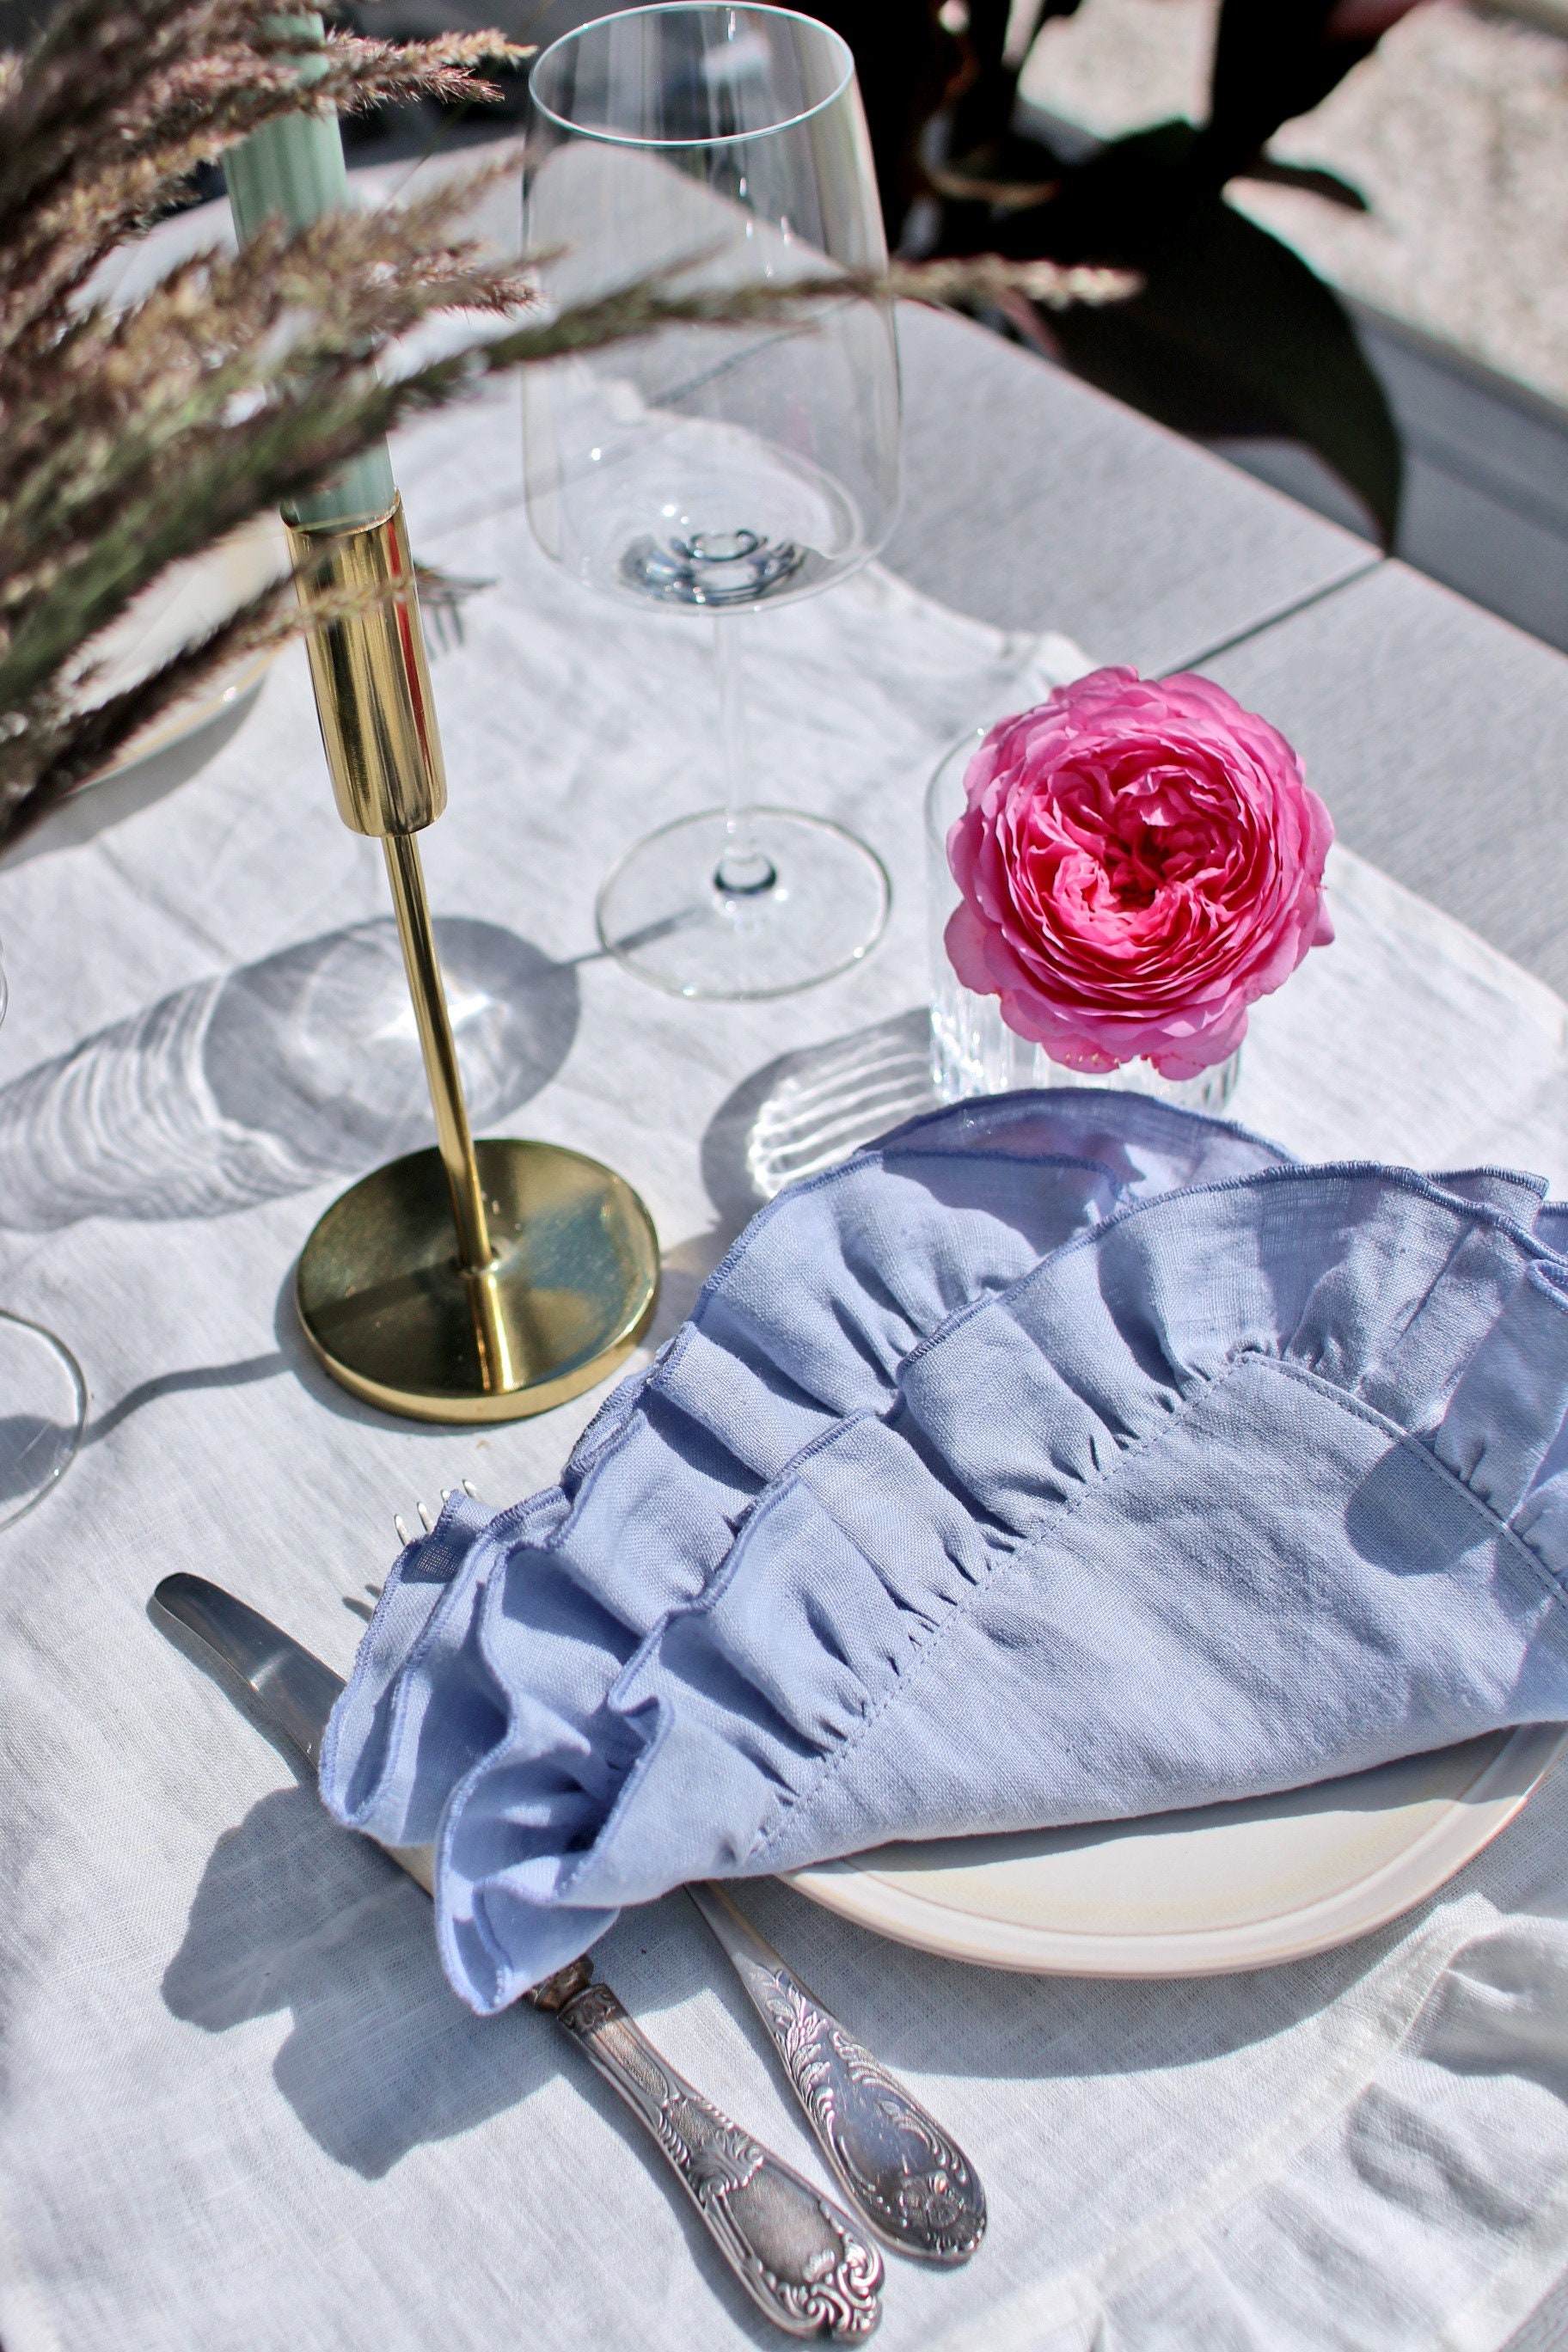 Linen Ruffle Napkins IRIS Natural Stonewashed Exquisite Linen Napkins.  Washed Soft Linen Table Elegant Napkins. Handmade Table Decor 